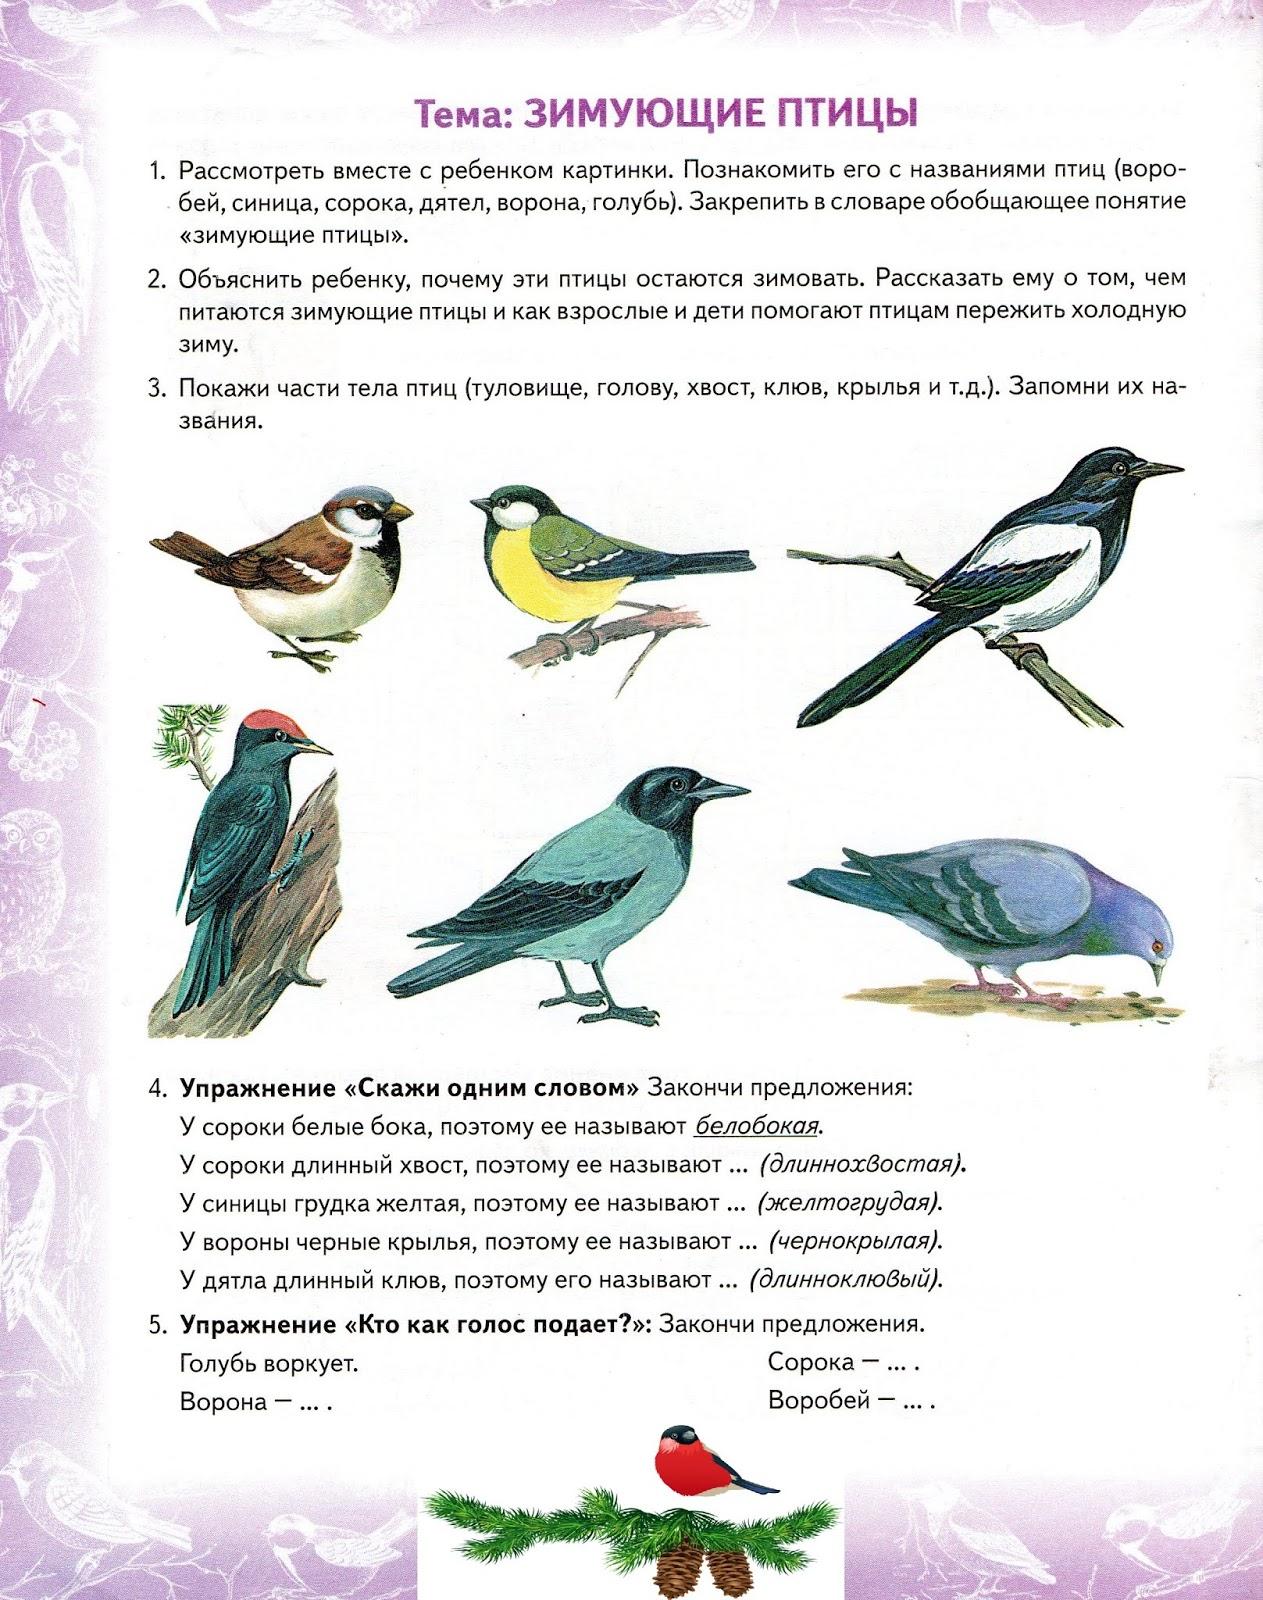 Птицы Сибири - 73 фото